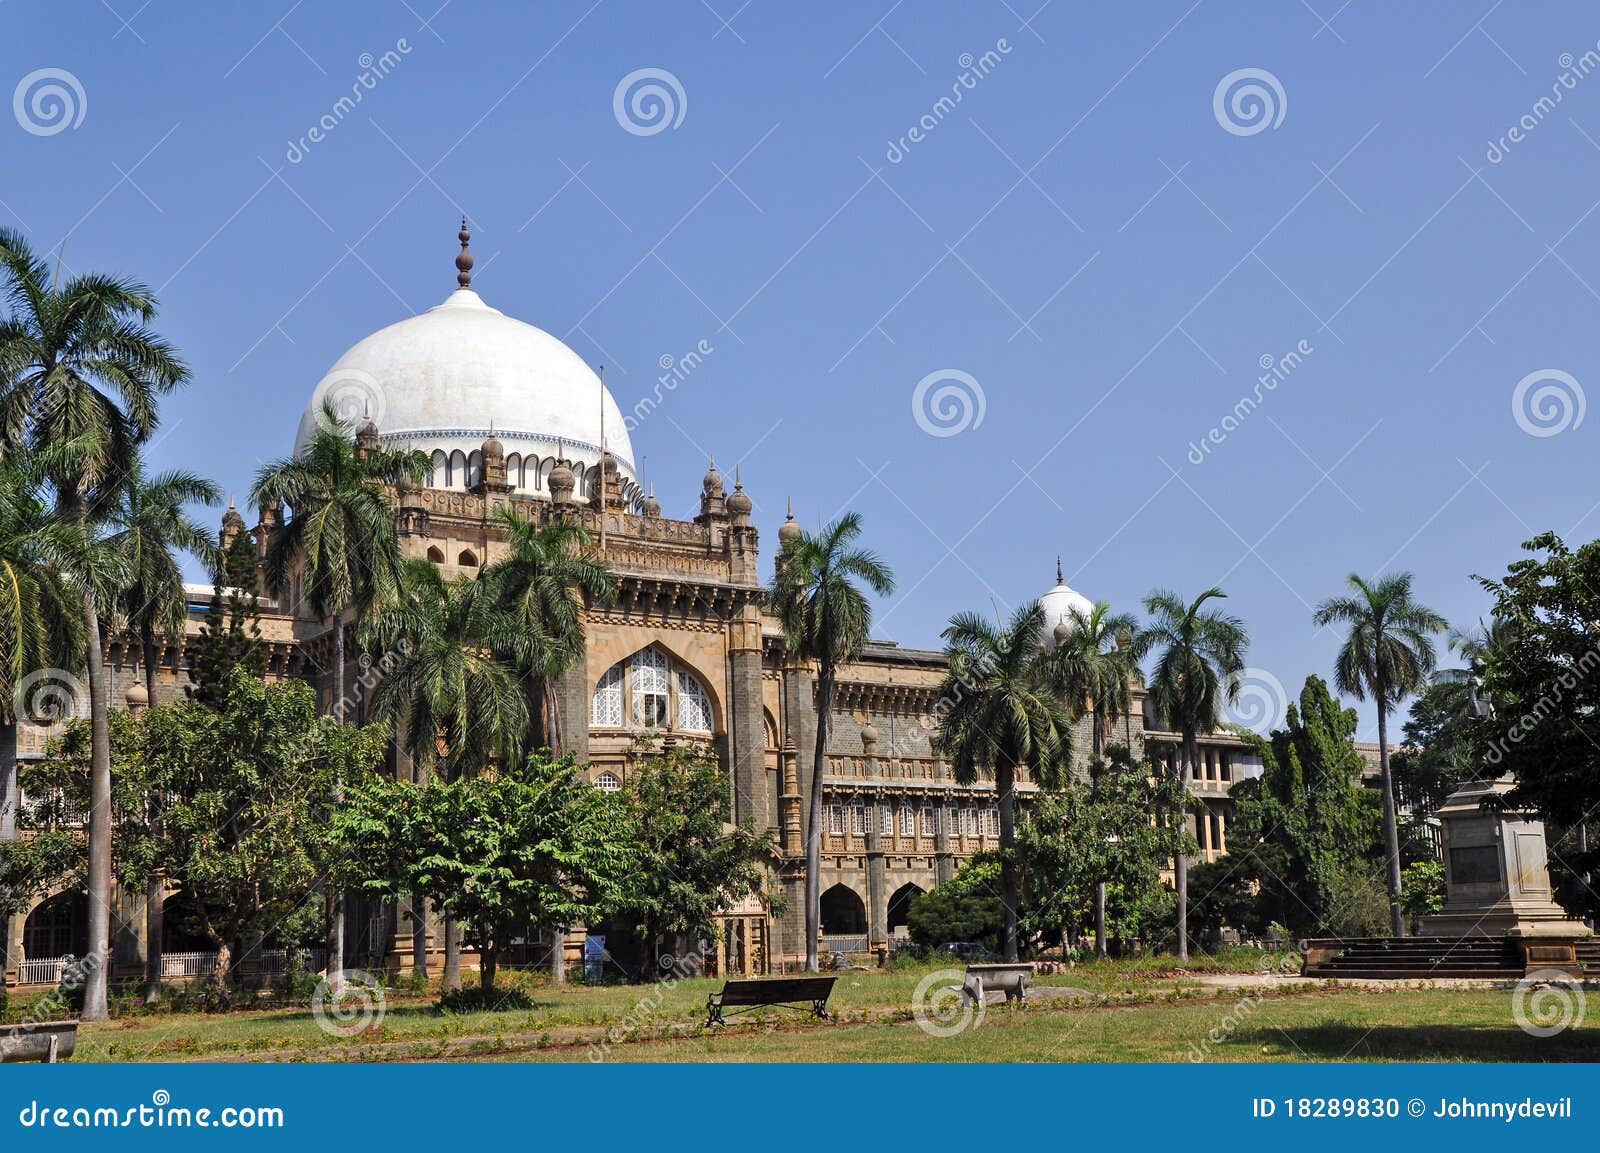 british colonial architecture in india